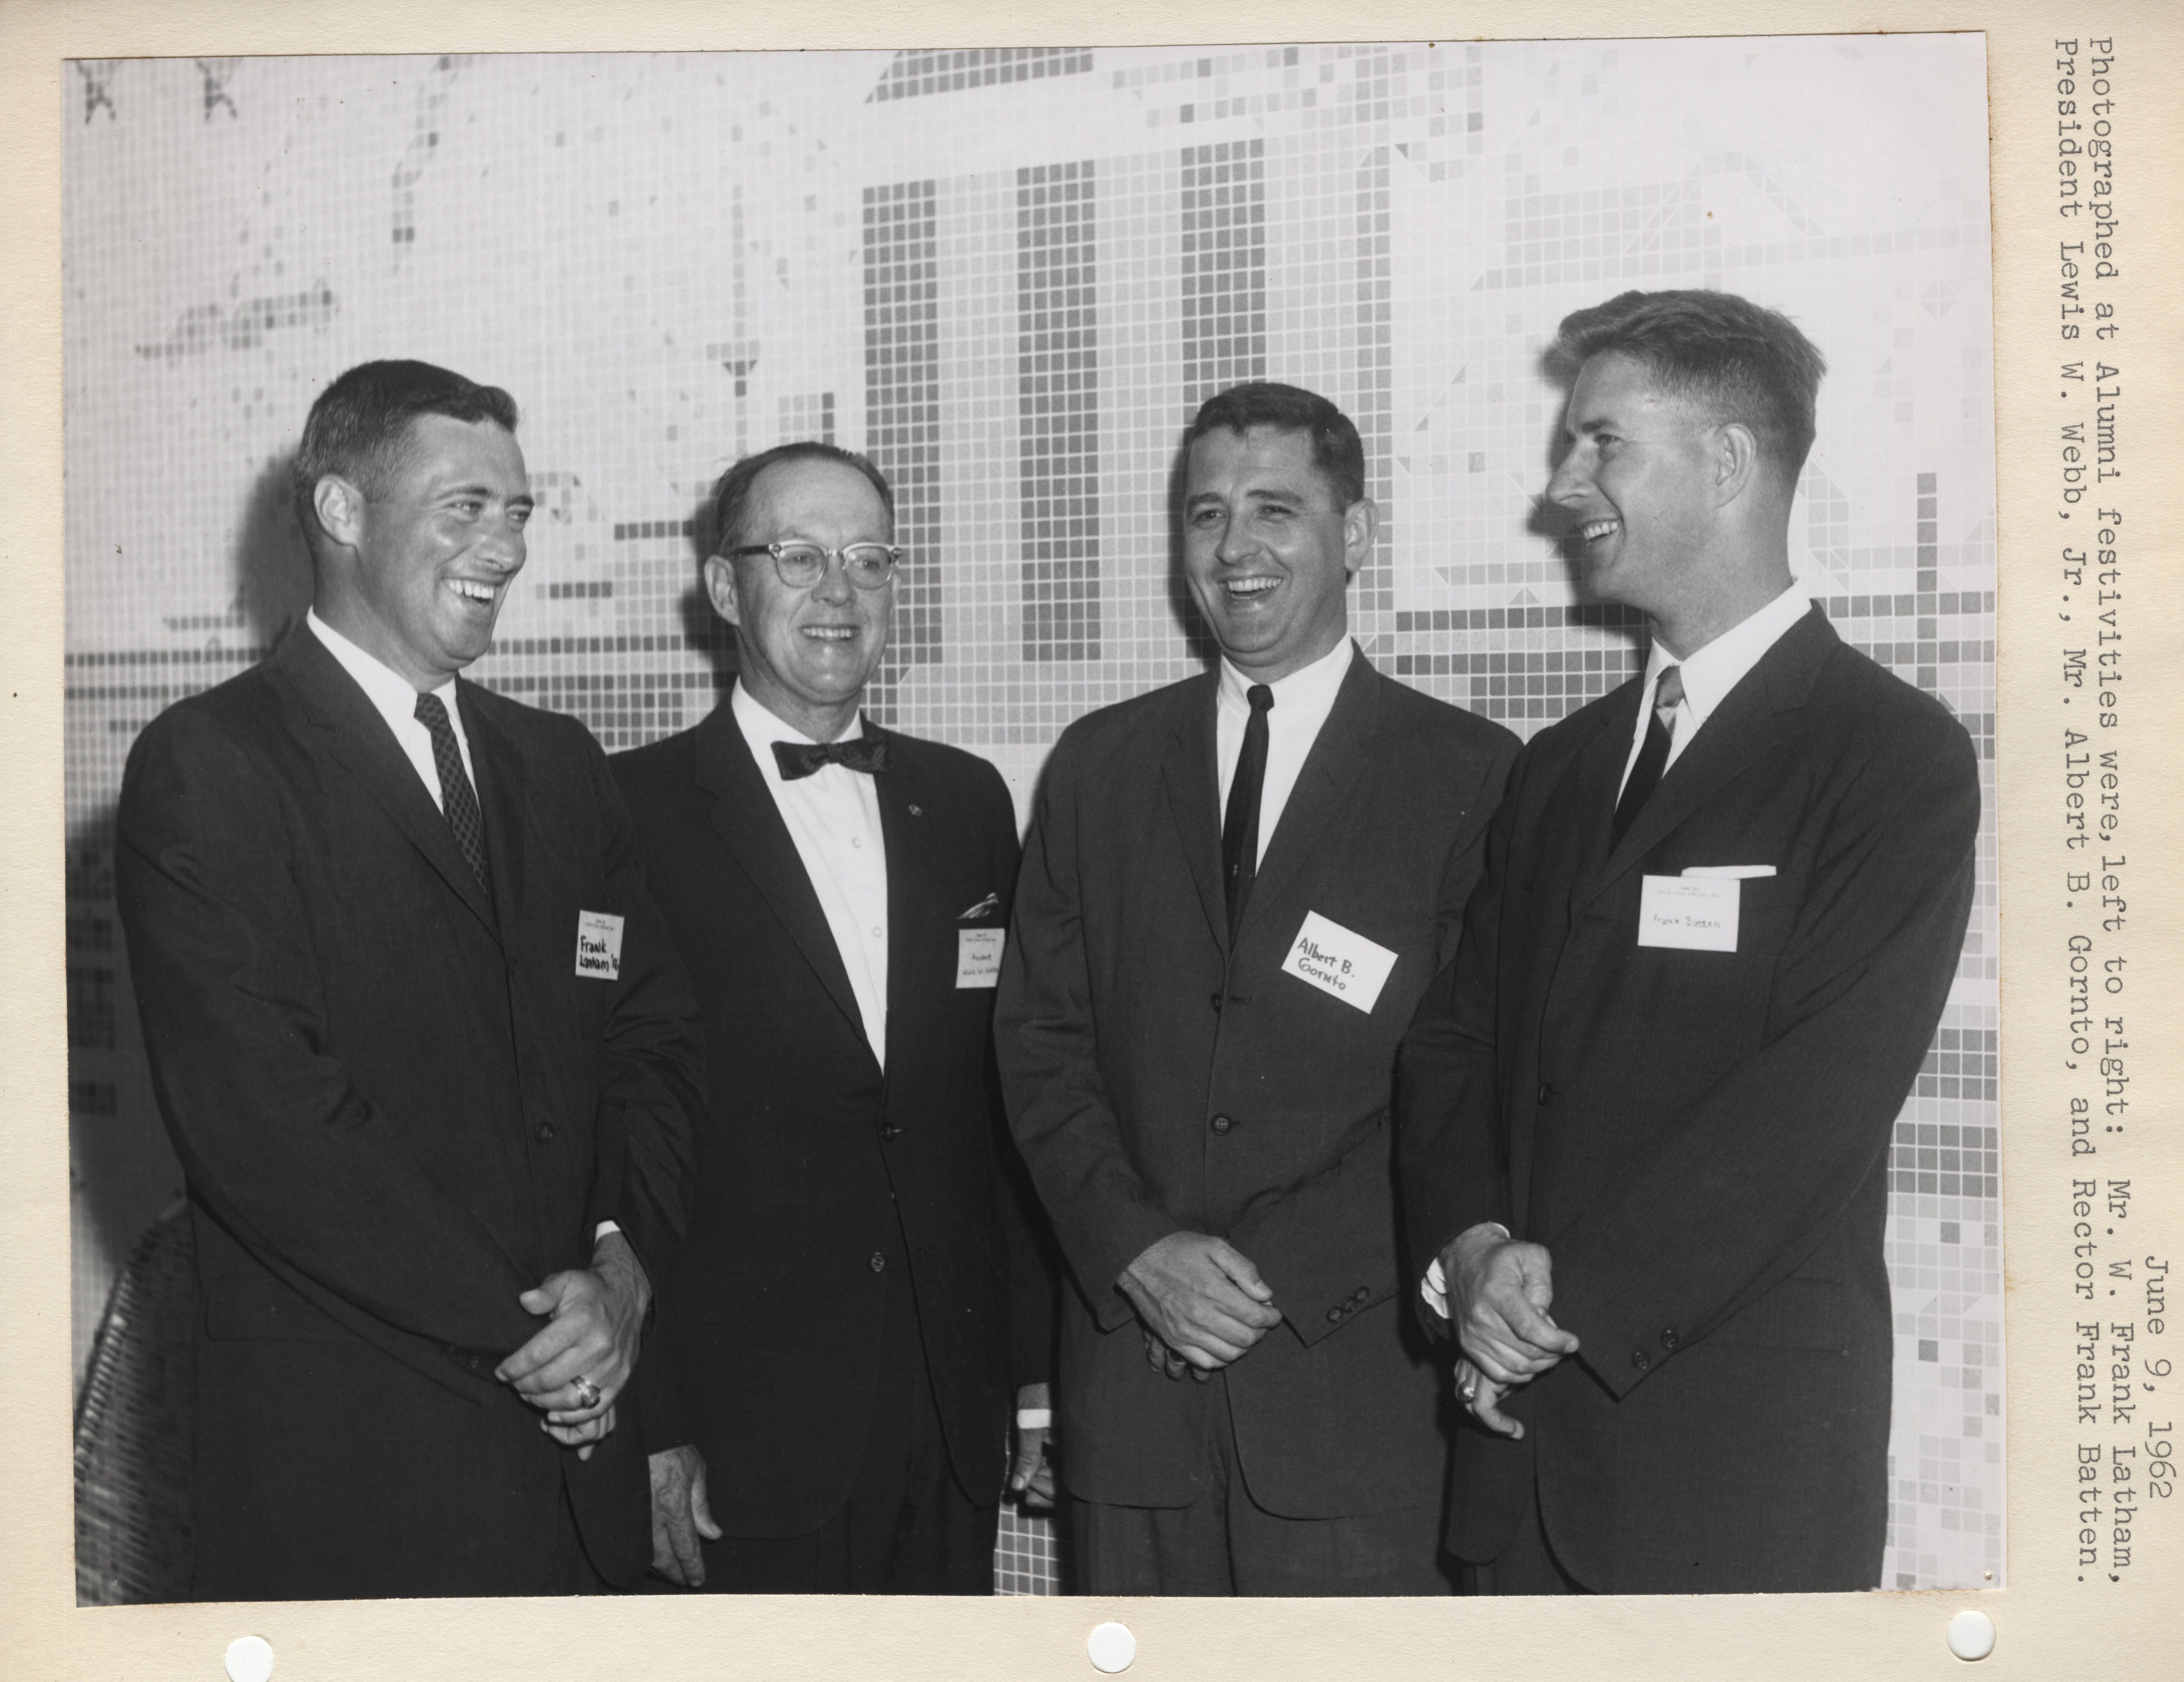 W. Frank Latham, President Webb, Albert Gornto, and Frank Batten at Alumni Event, June 9, 1962 